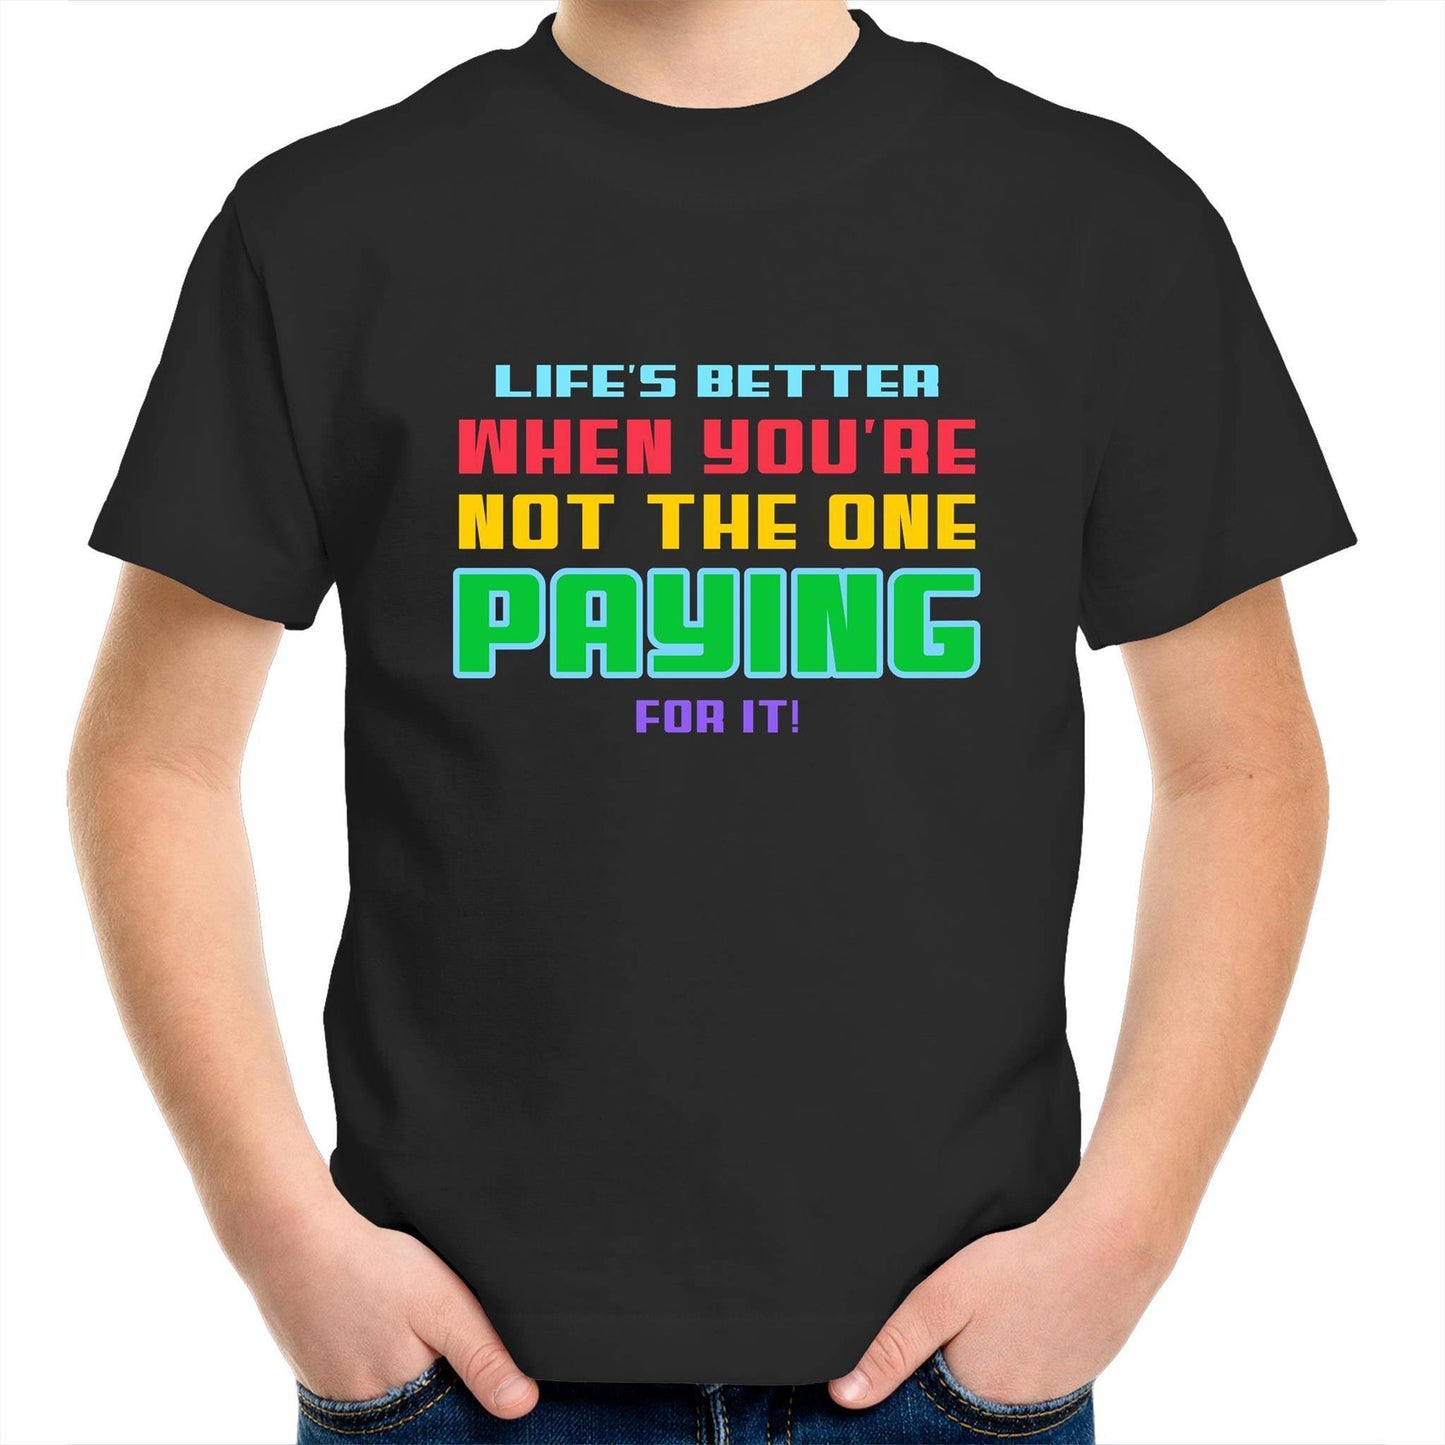 Life's Better - Kids Youth Crew T-Shirt Black Kids Youth T-shirt